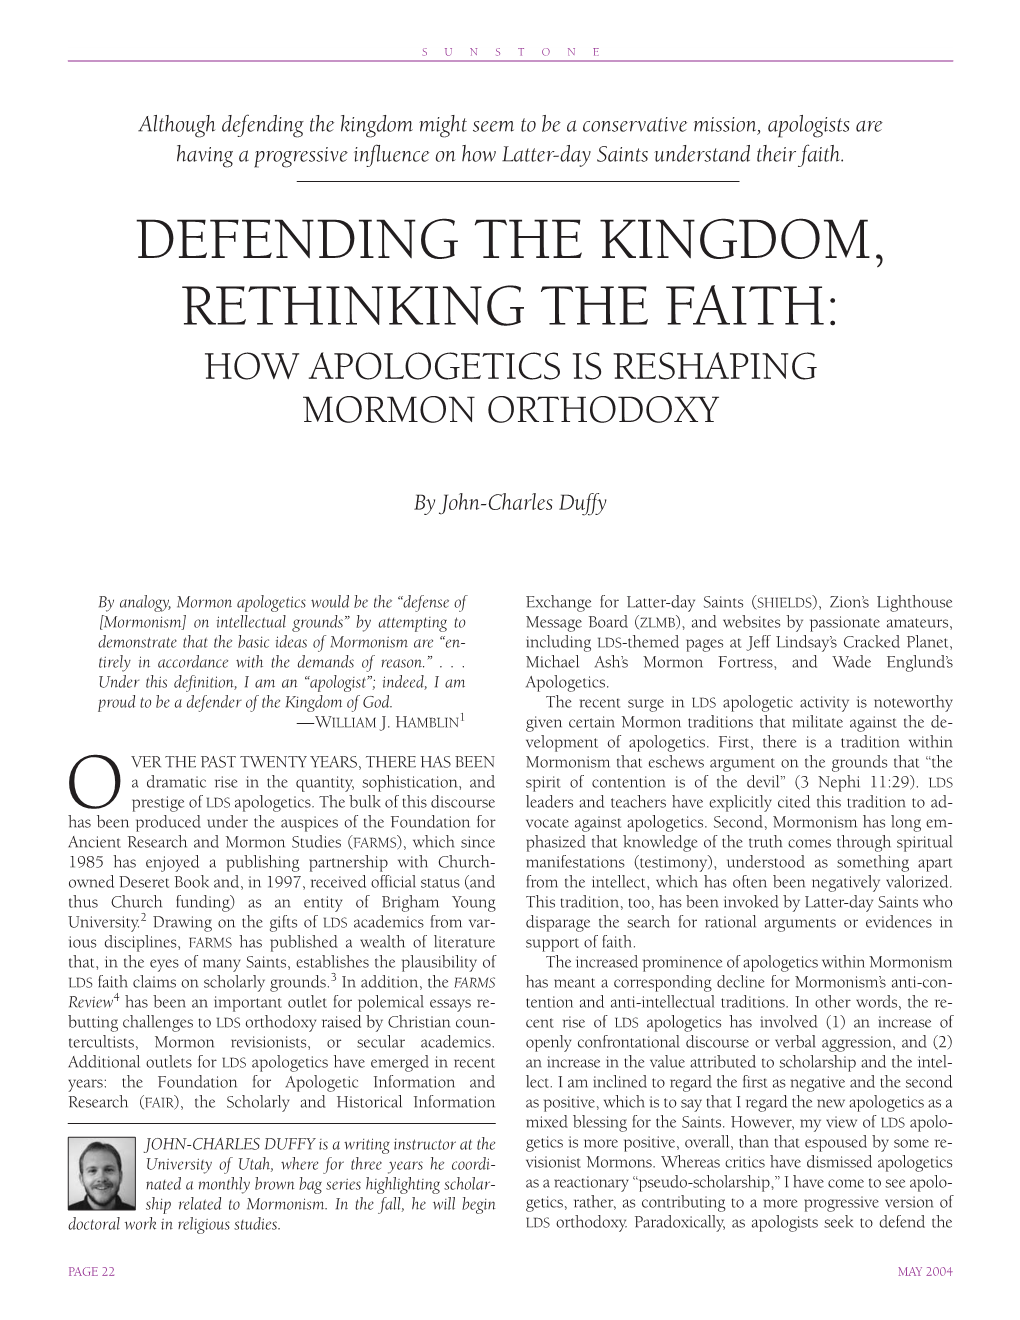 Defending the Kingdom, Rethinking the Faith: How Apologetics Is Reshaping Mormon Orthodoxy